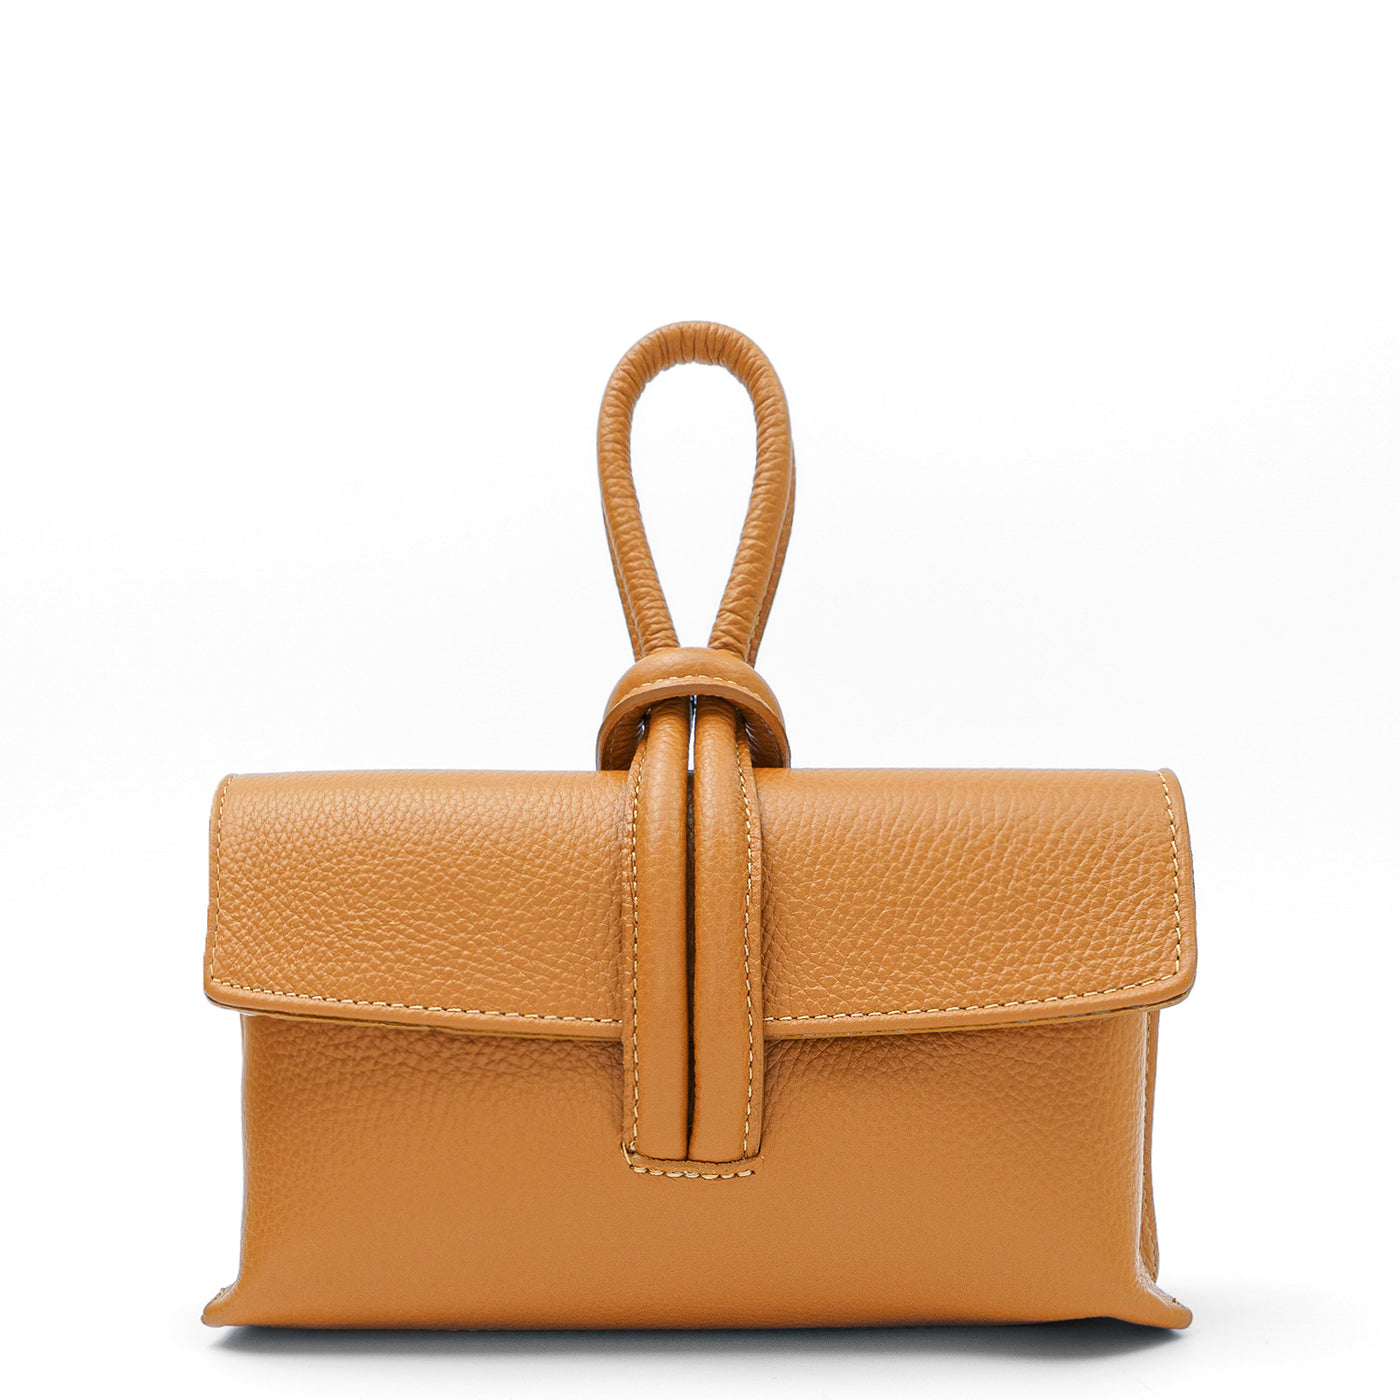 Leather bag "Barletta", Light brown